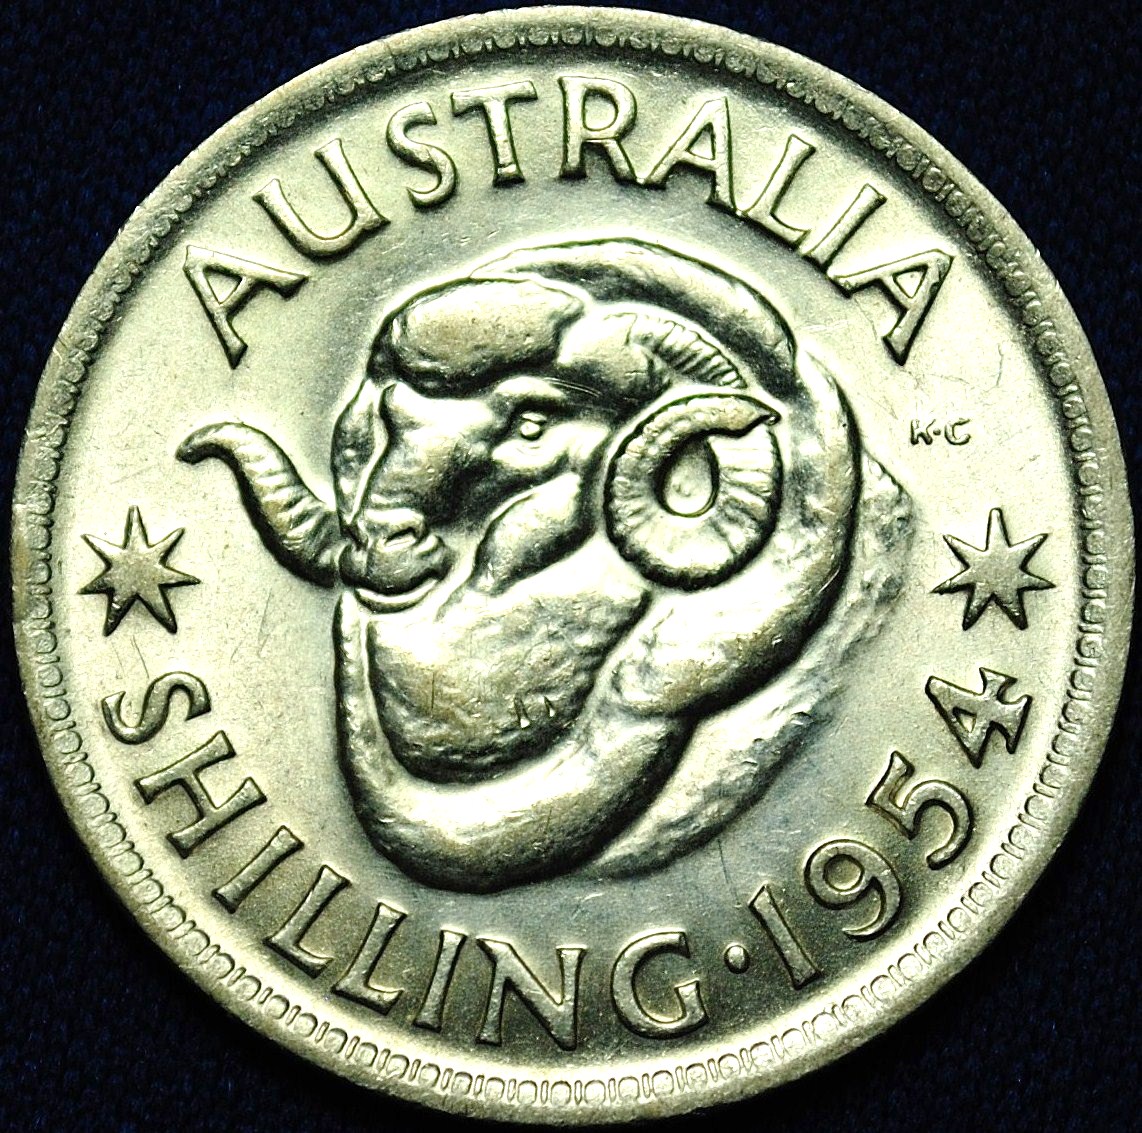 1954 Australian Shilling reverse